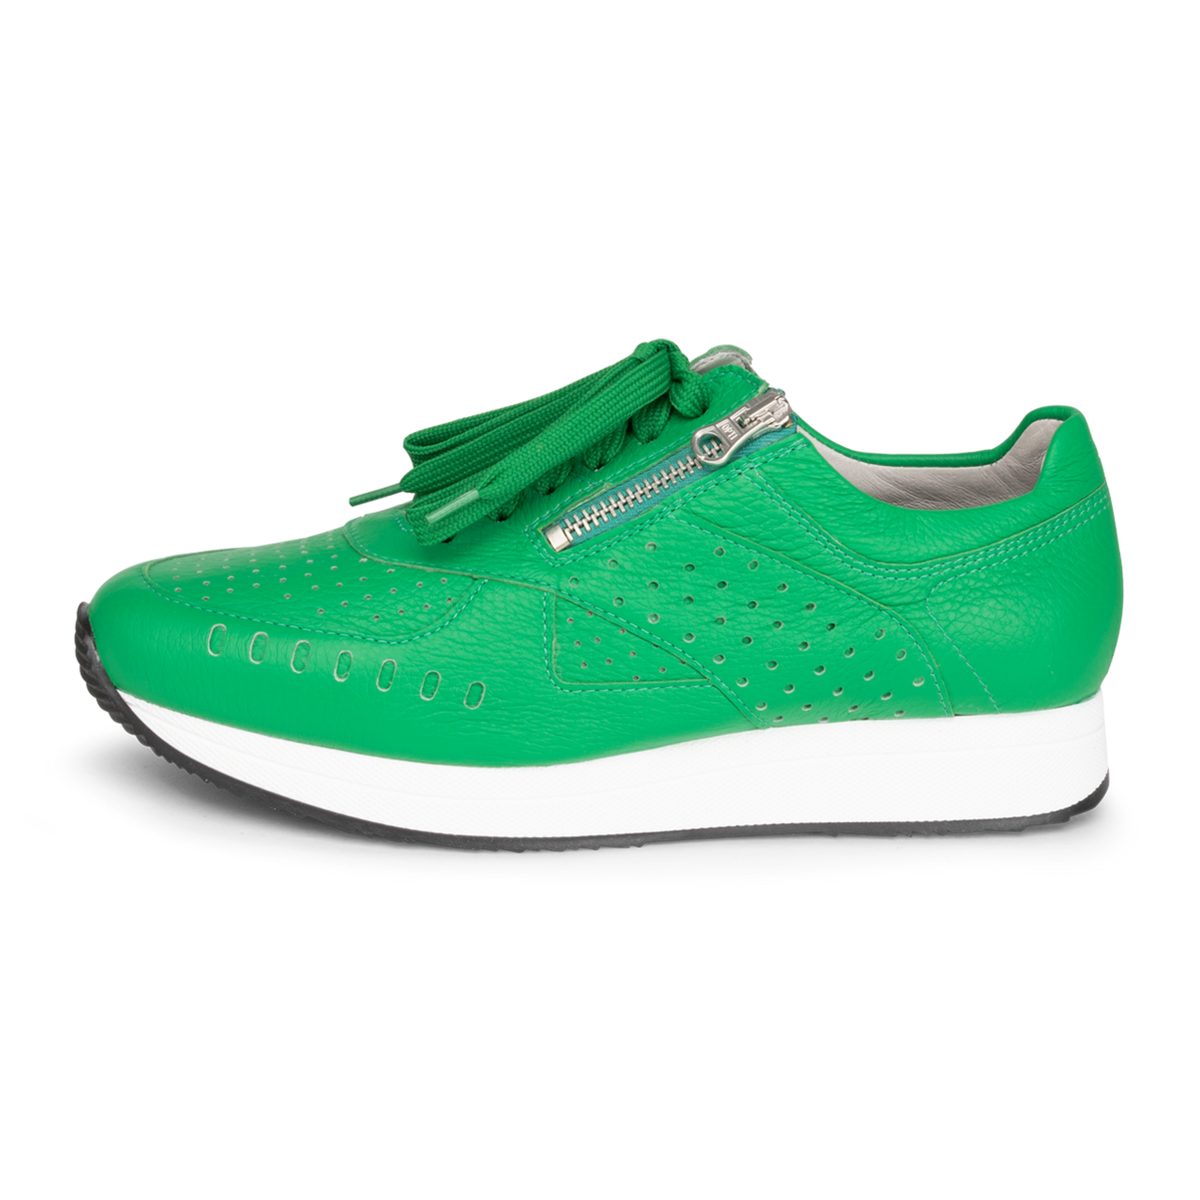 moderne sneaker hertenleer groen